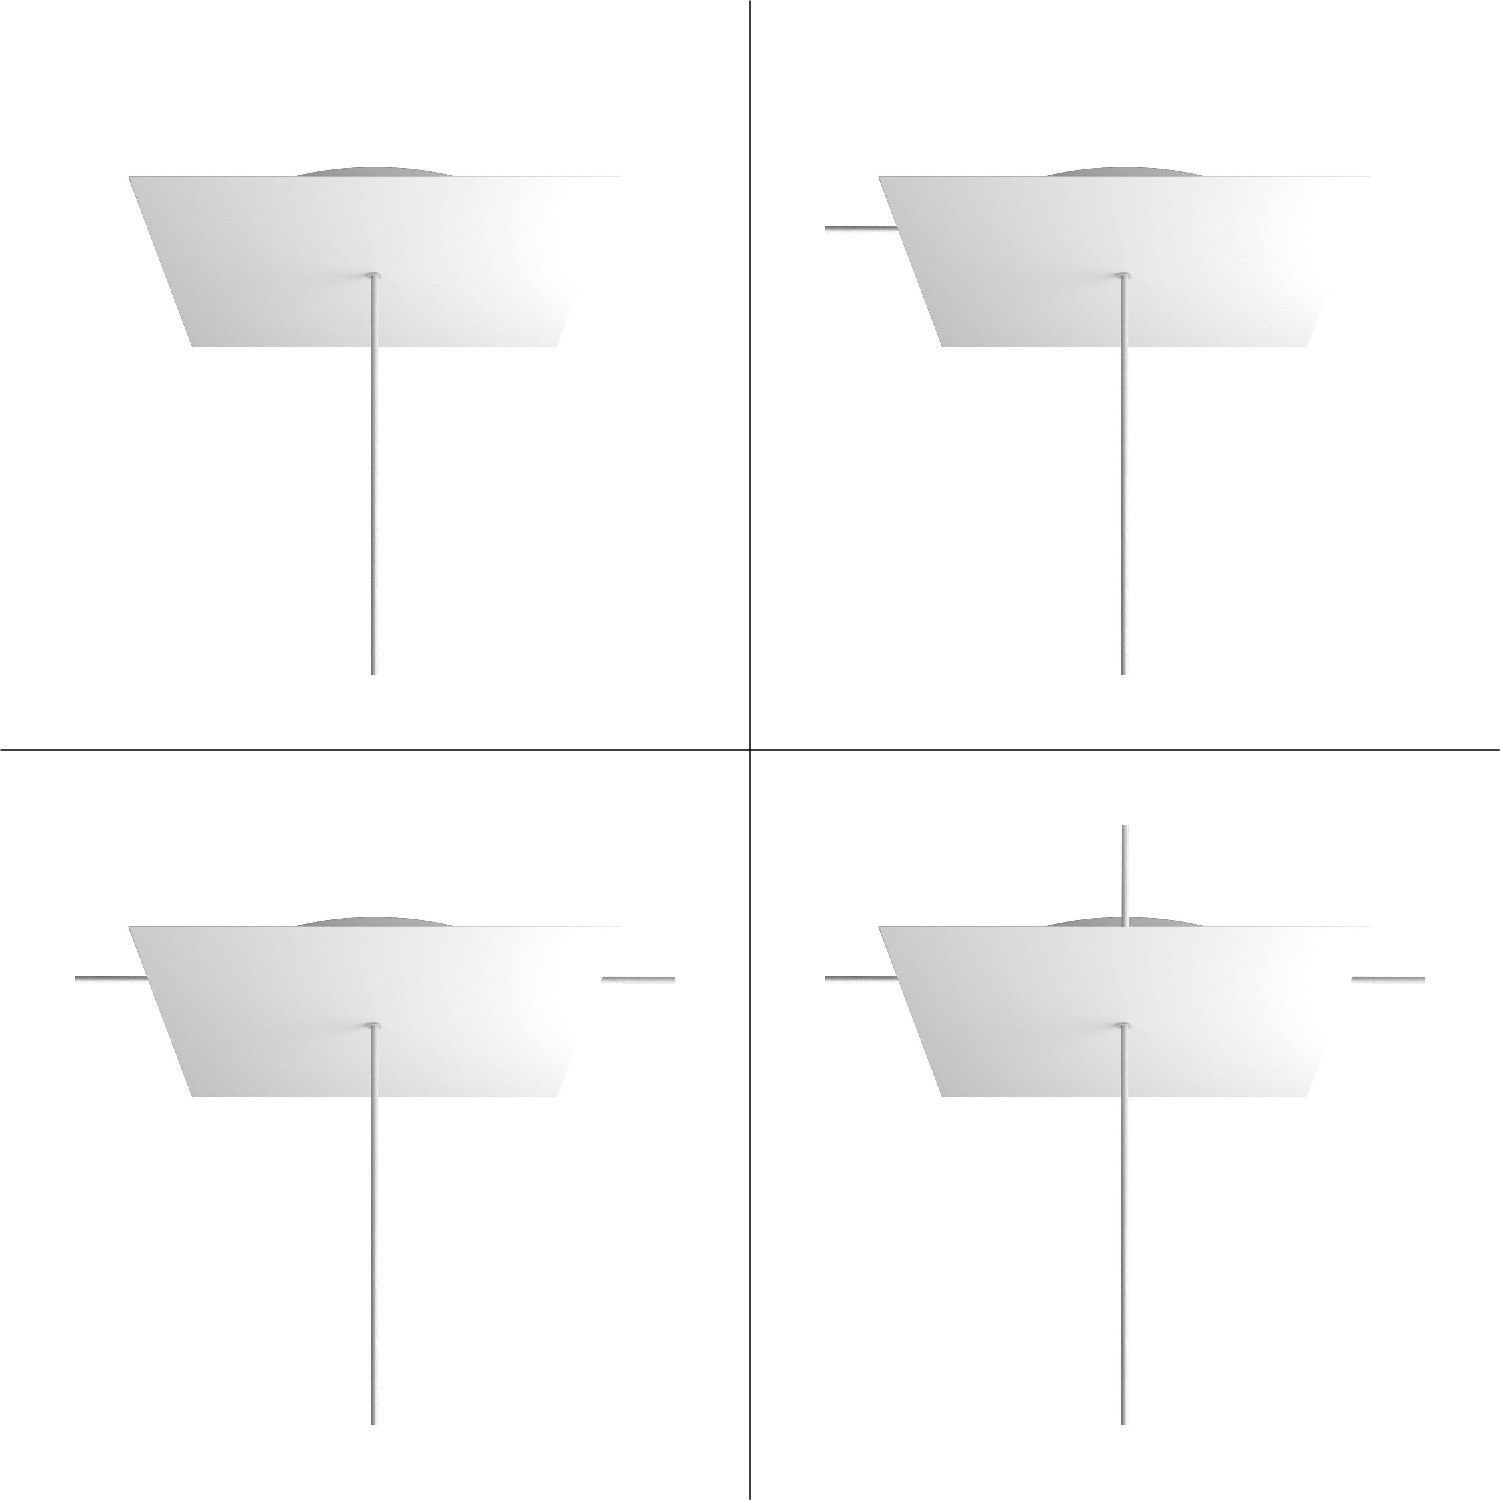 Rose-One compleet vierkant plafondkap-kit 400 mm. met 1 gat en 4 zijgaten